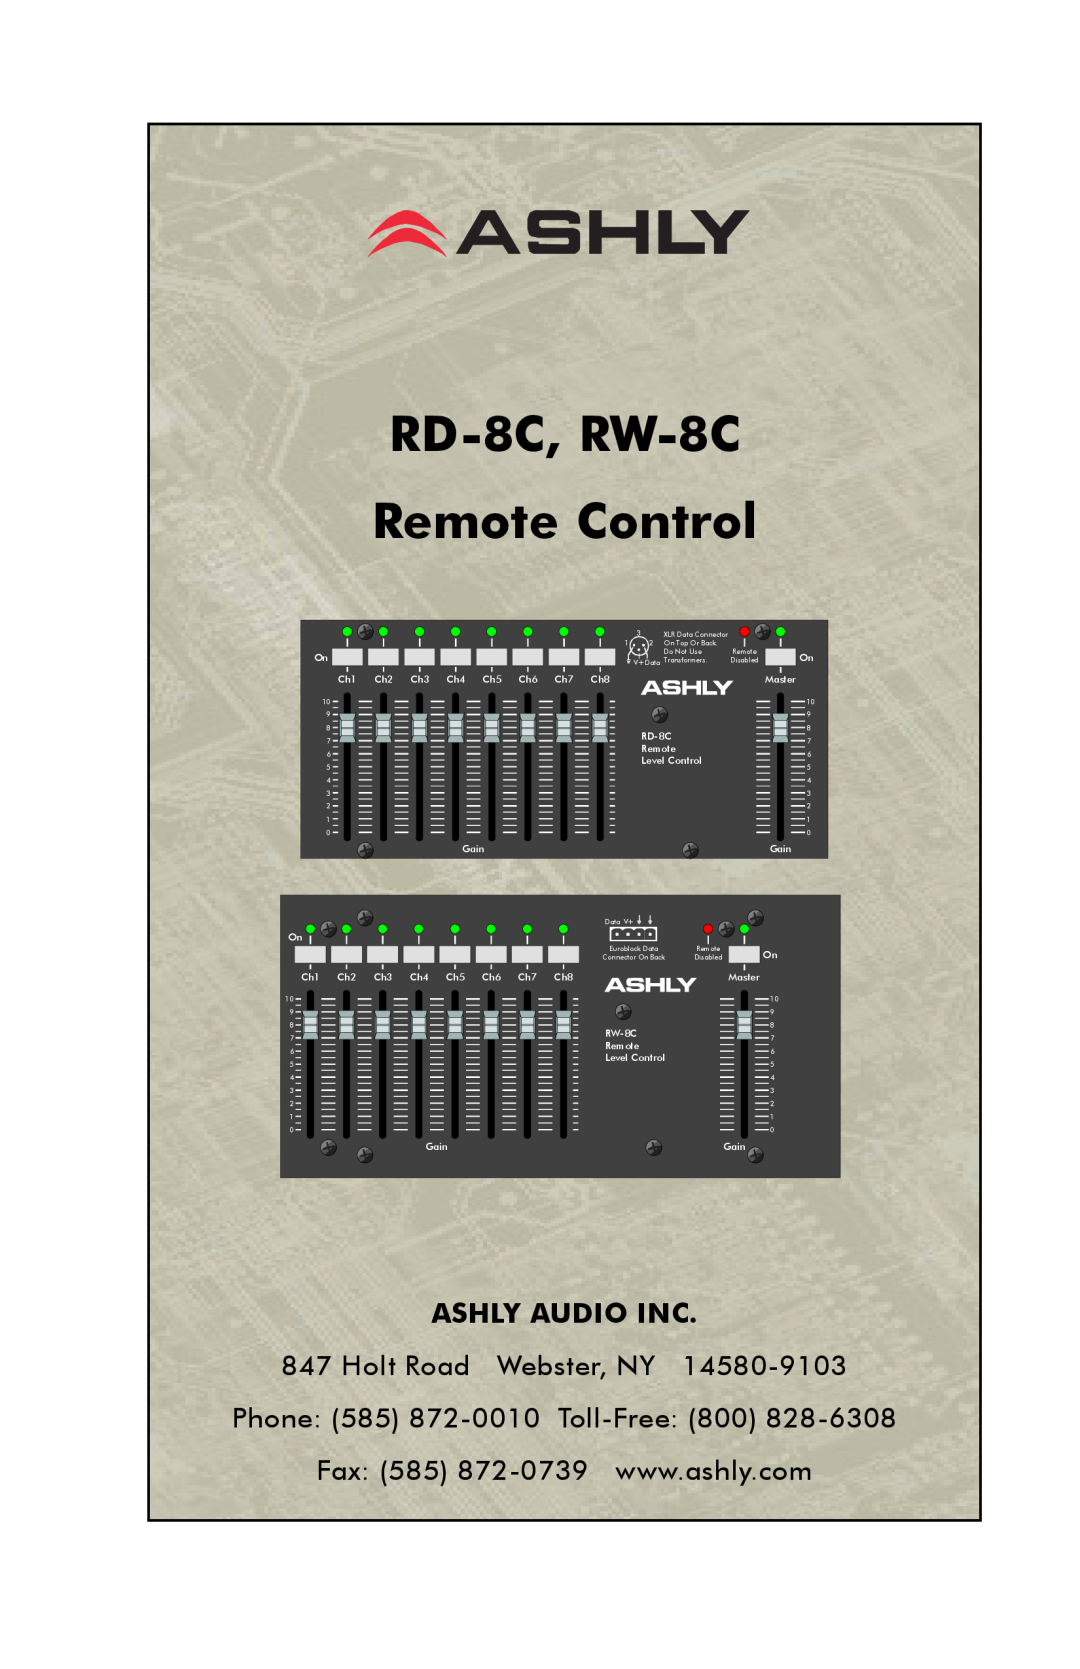 Ashly manual RD-8C, RW-8C, Remote Control, Ashly Audio Inc, Holt Road, Webster, NY, 14580-9103, Phone 585, Fax 